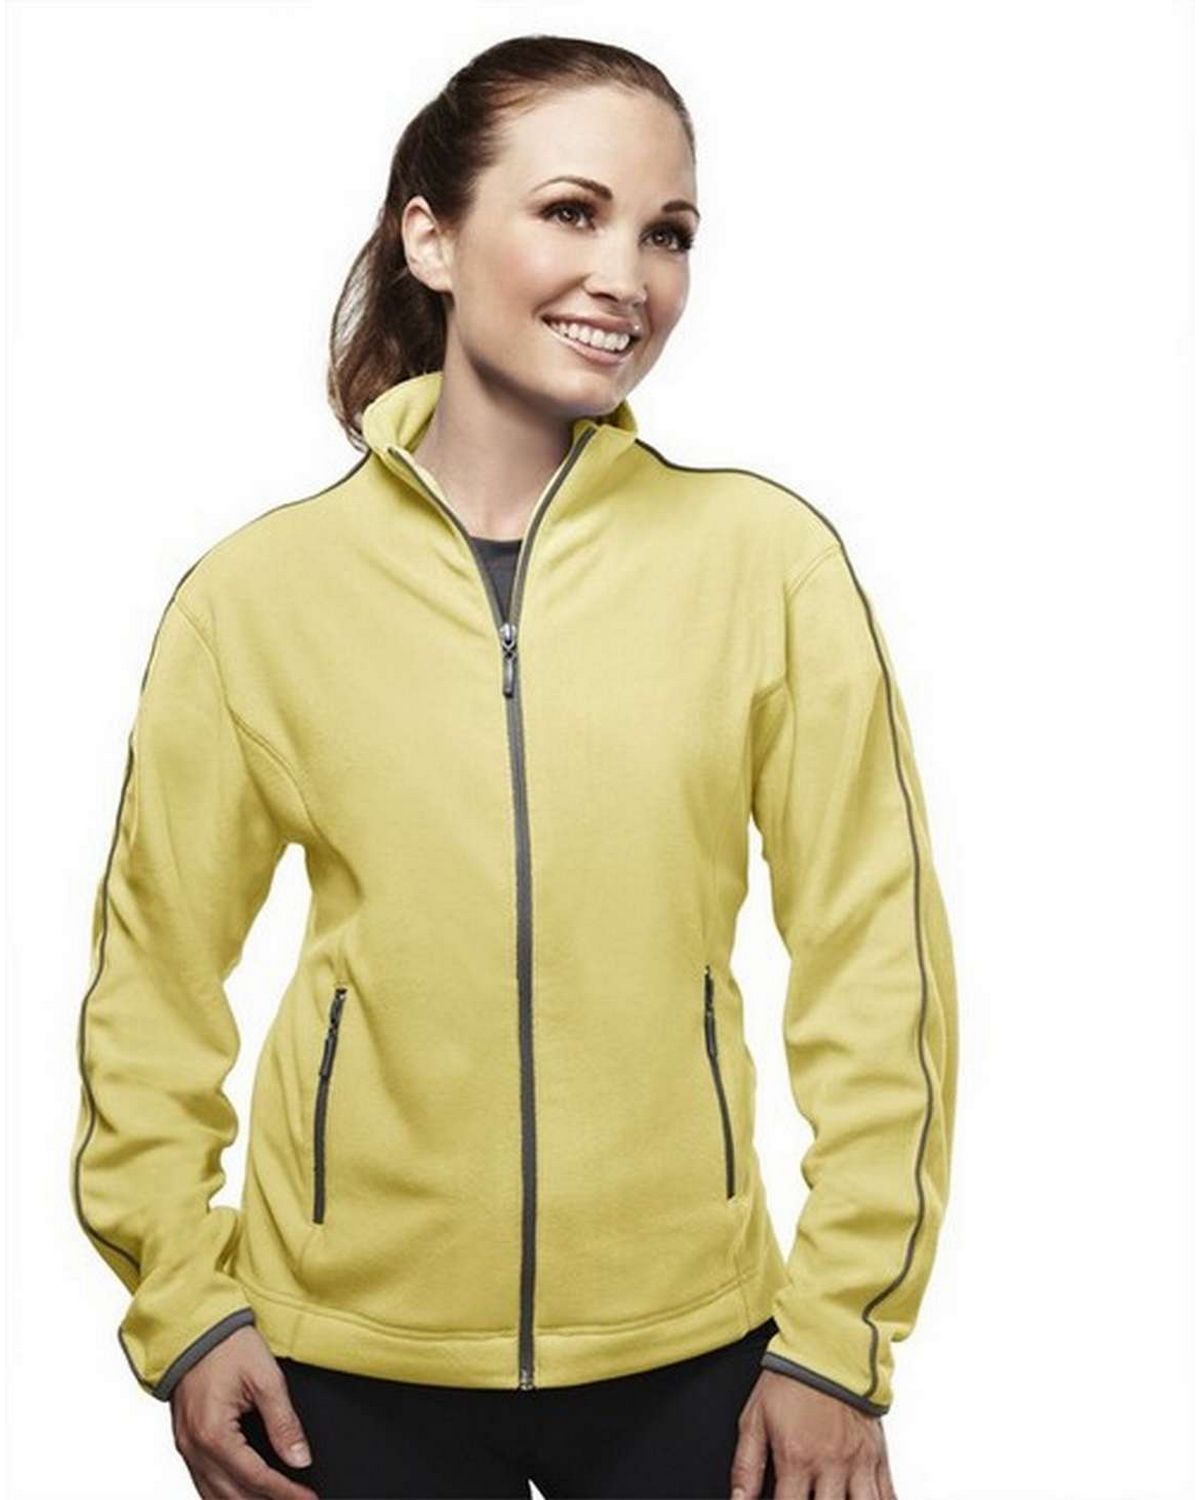 Buy Tri-Mountain 7220 Women's micro fleece jacket with trim